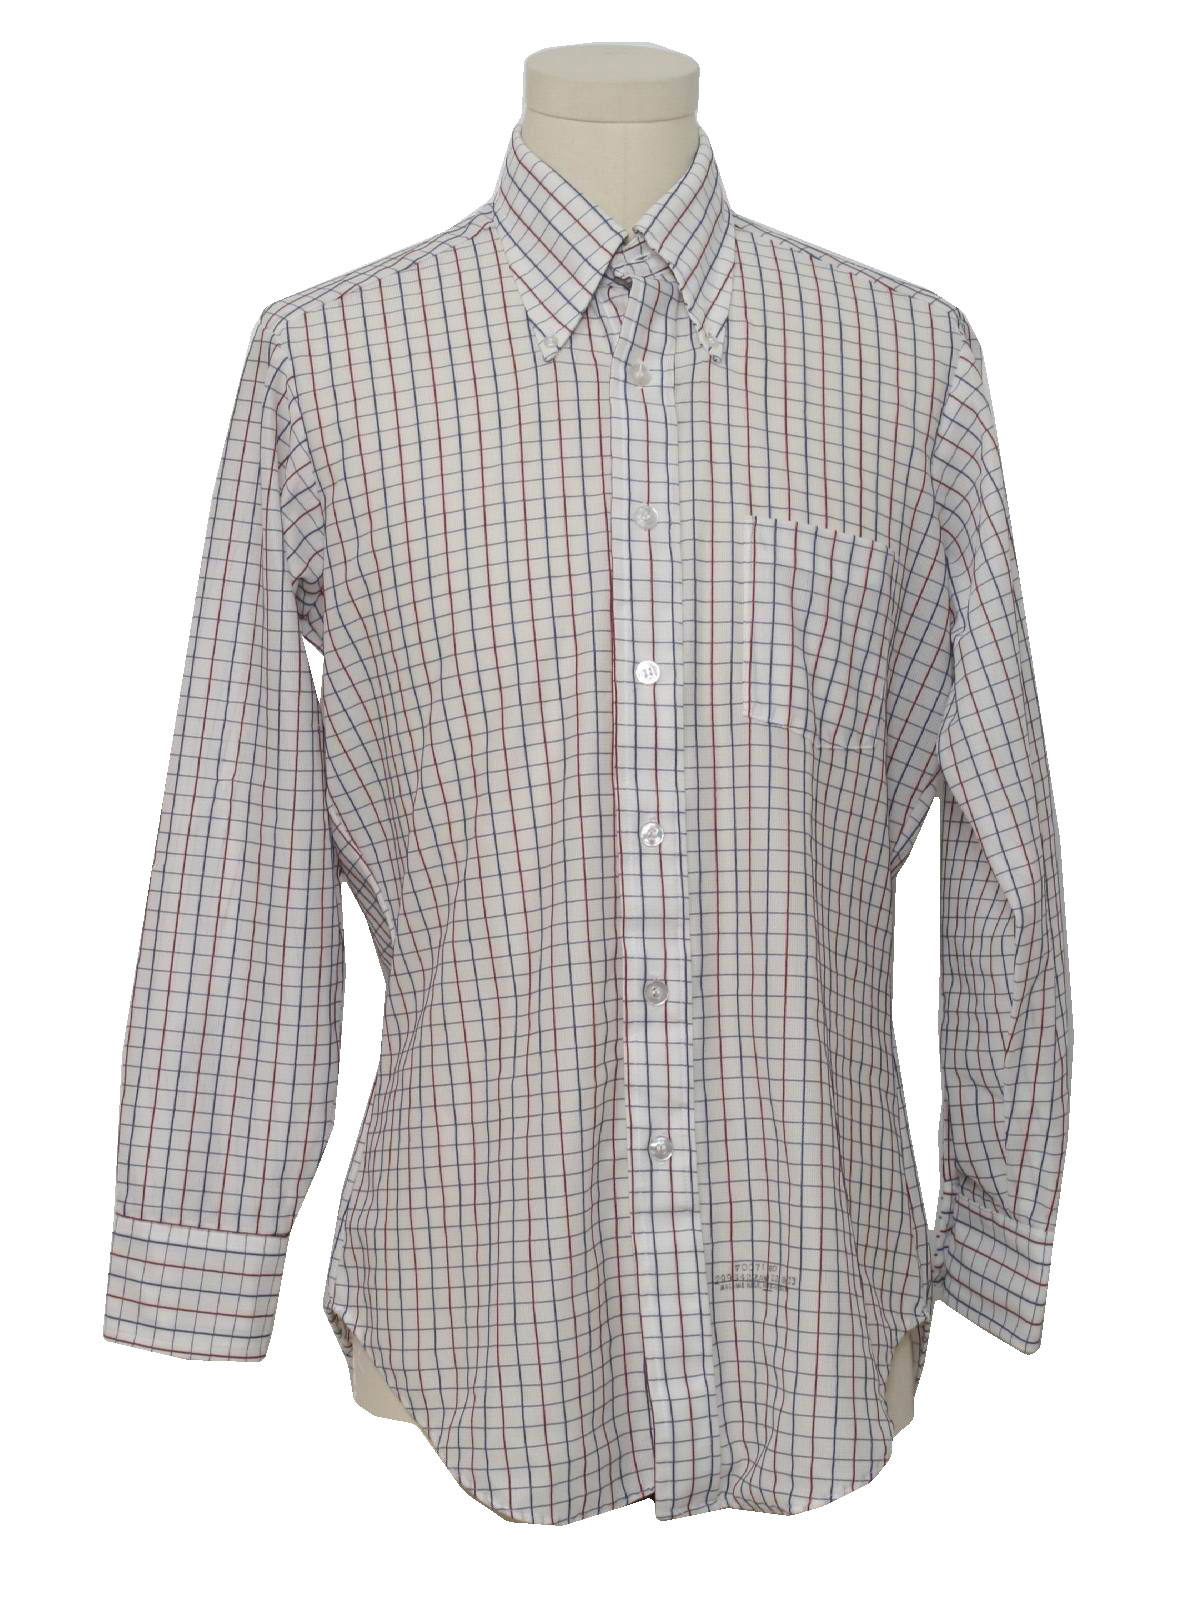 Retro 70s Shirt (Sears) : 70s -Sears- Mens white background, navy blue ...